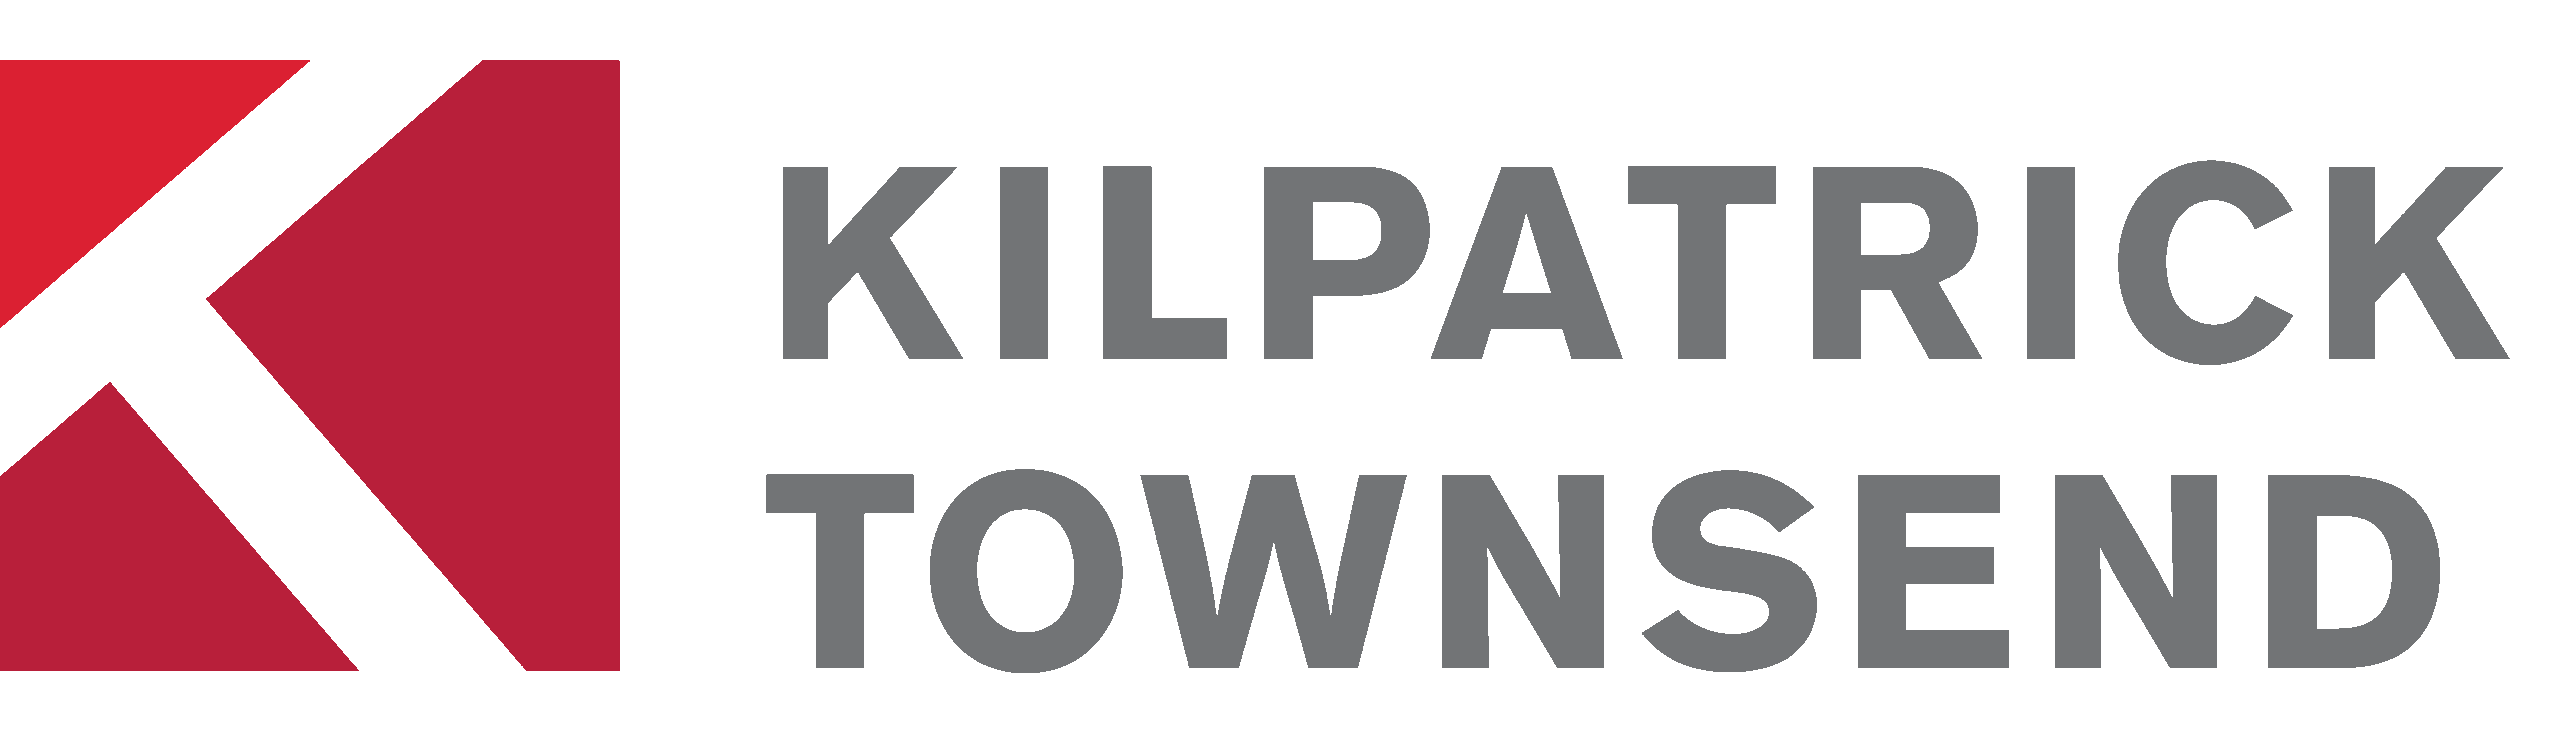 Kilpatrick Townsend logo